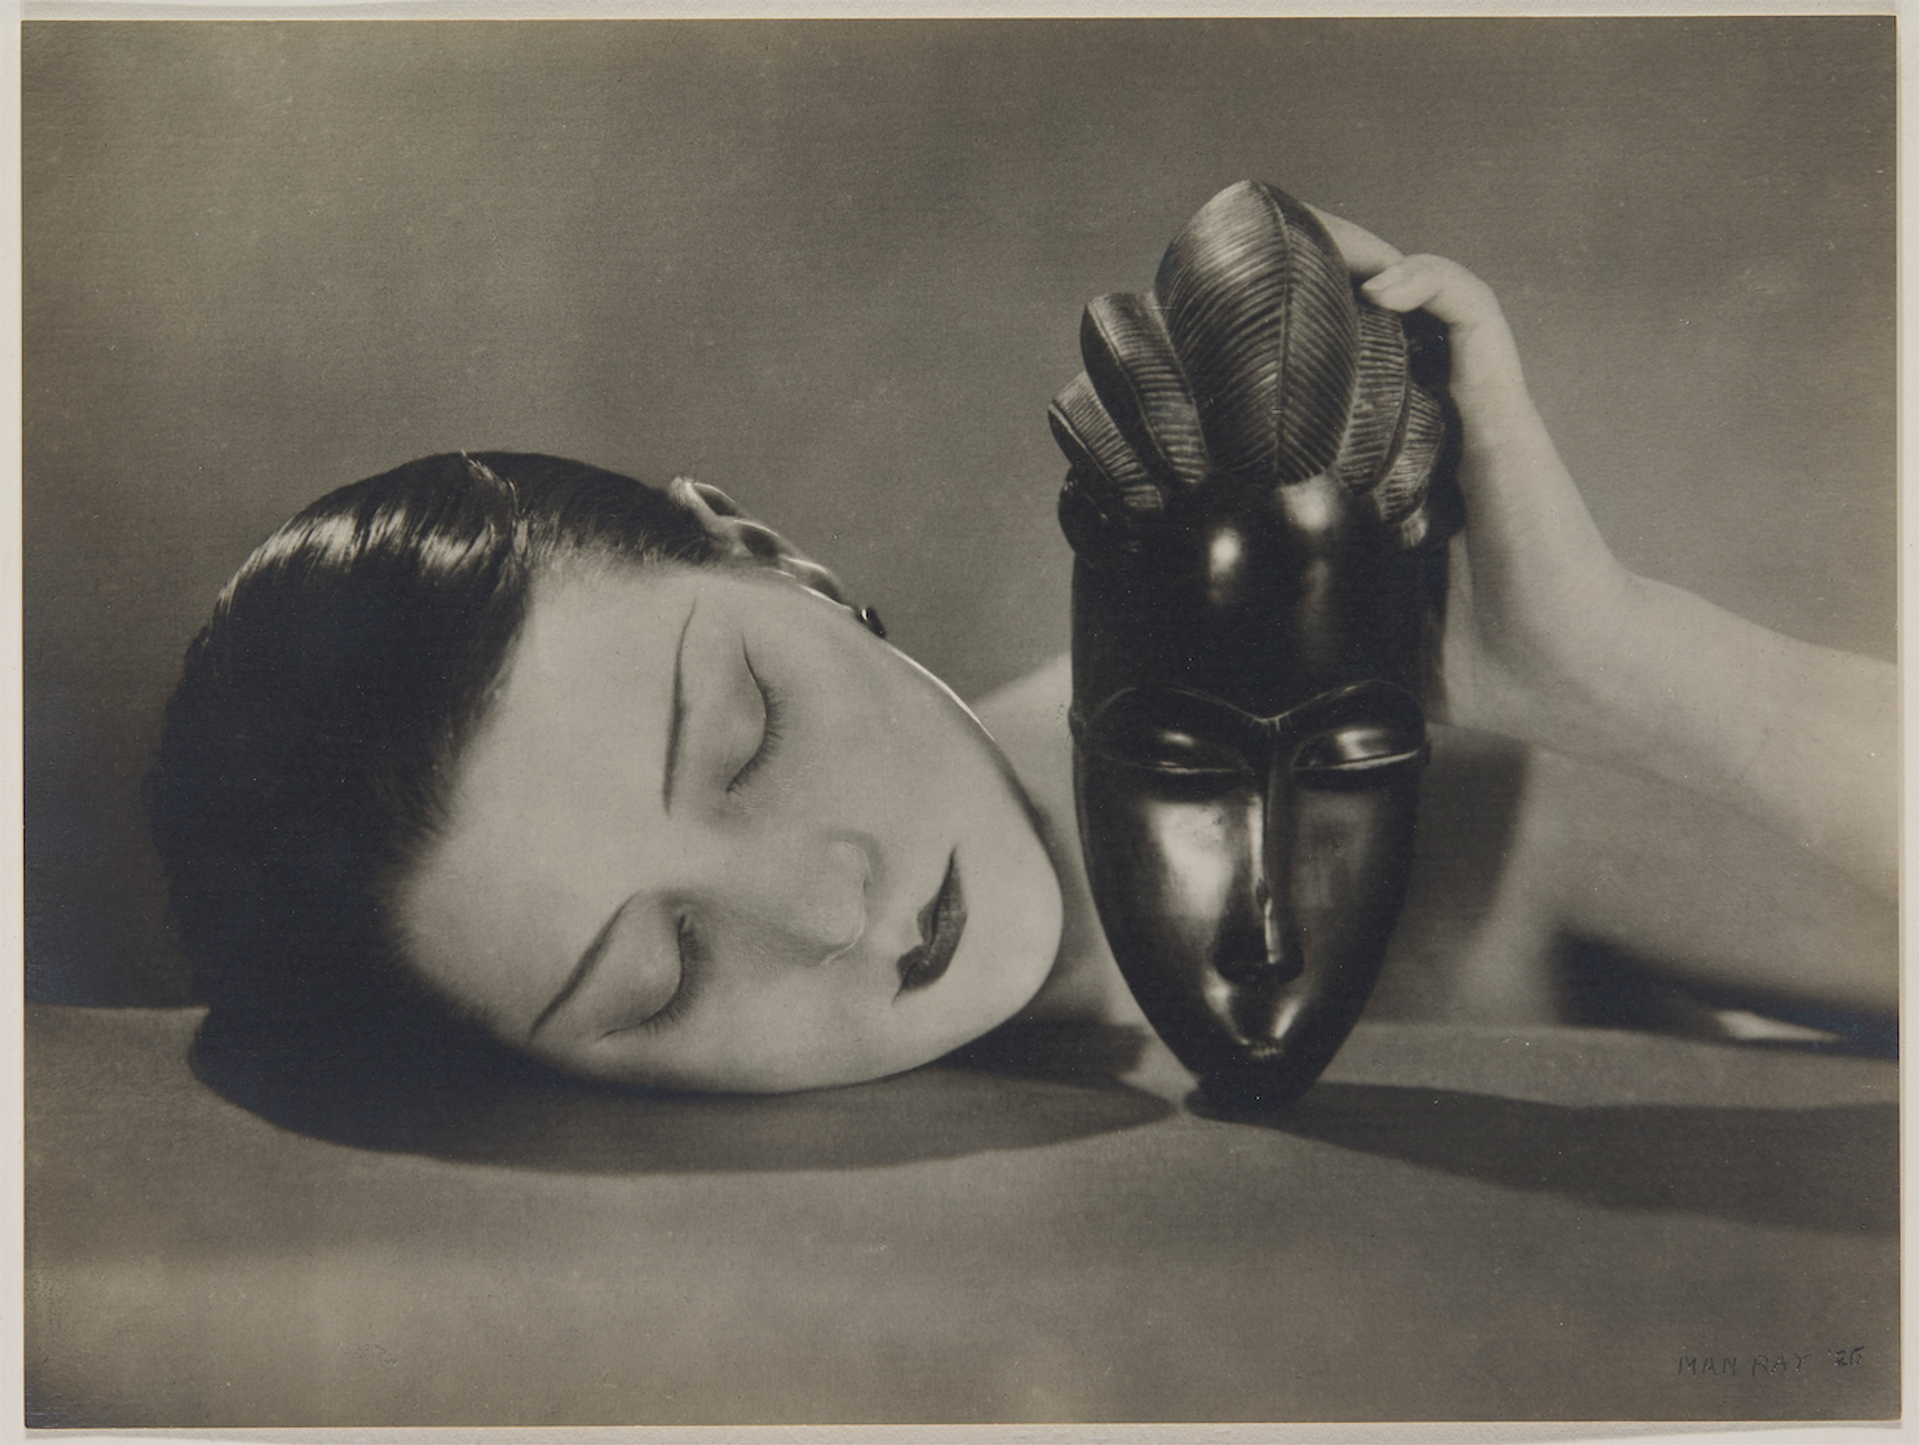 Man Ray, Noire et Blanche, 1926. © Man Ray 2015 Trust / Adagp, Paris 2020, Pinault Collection